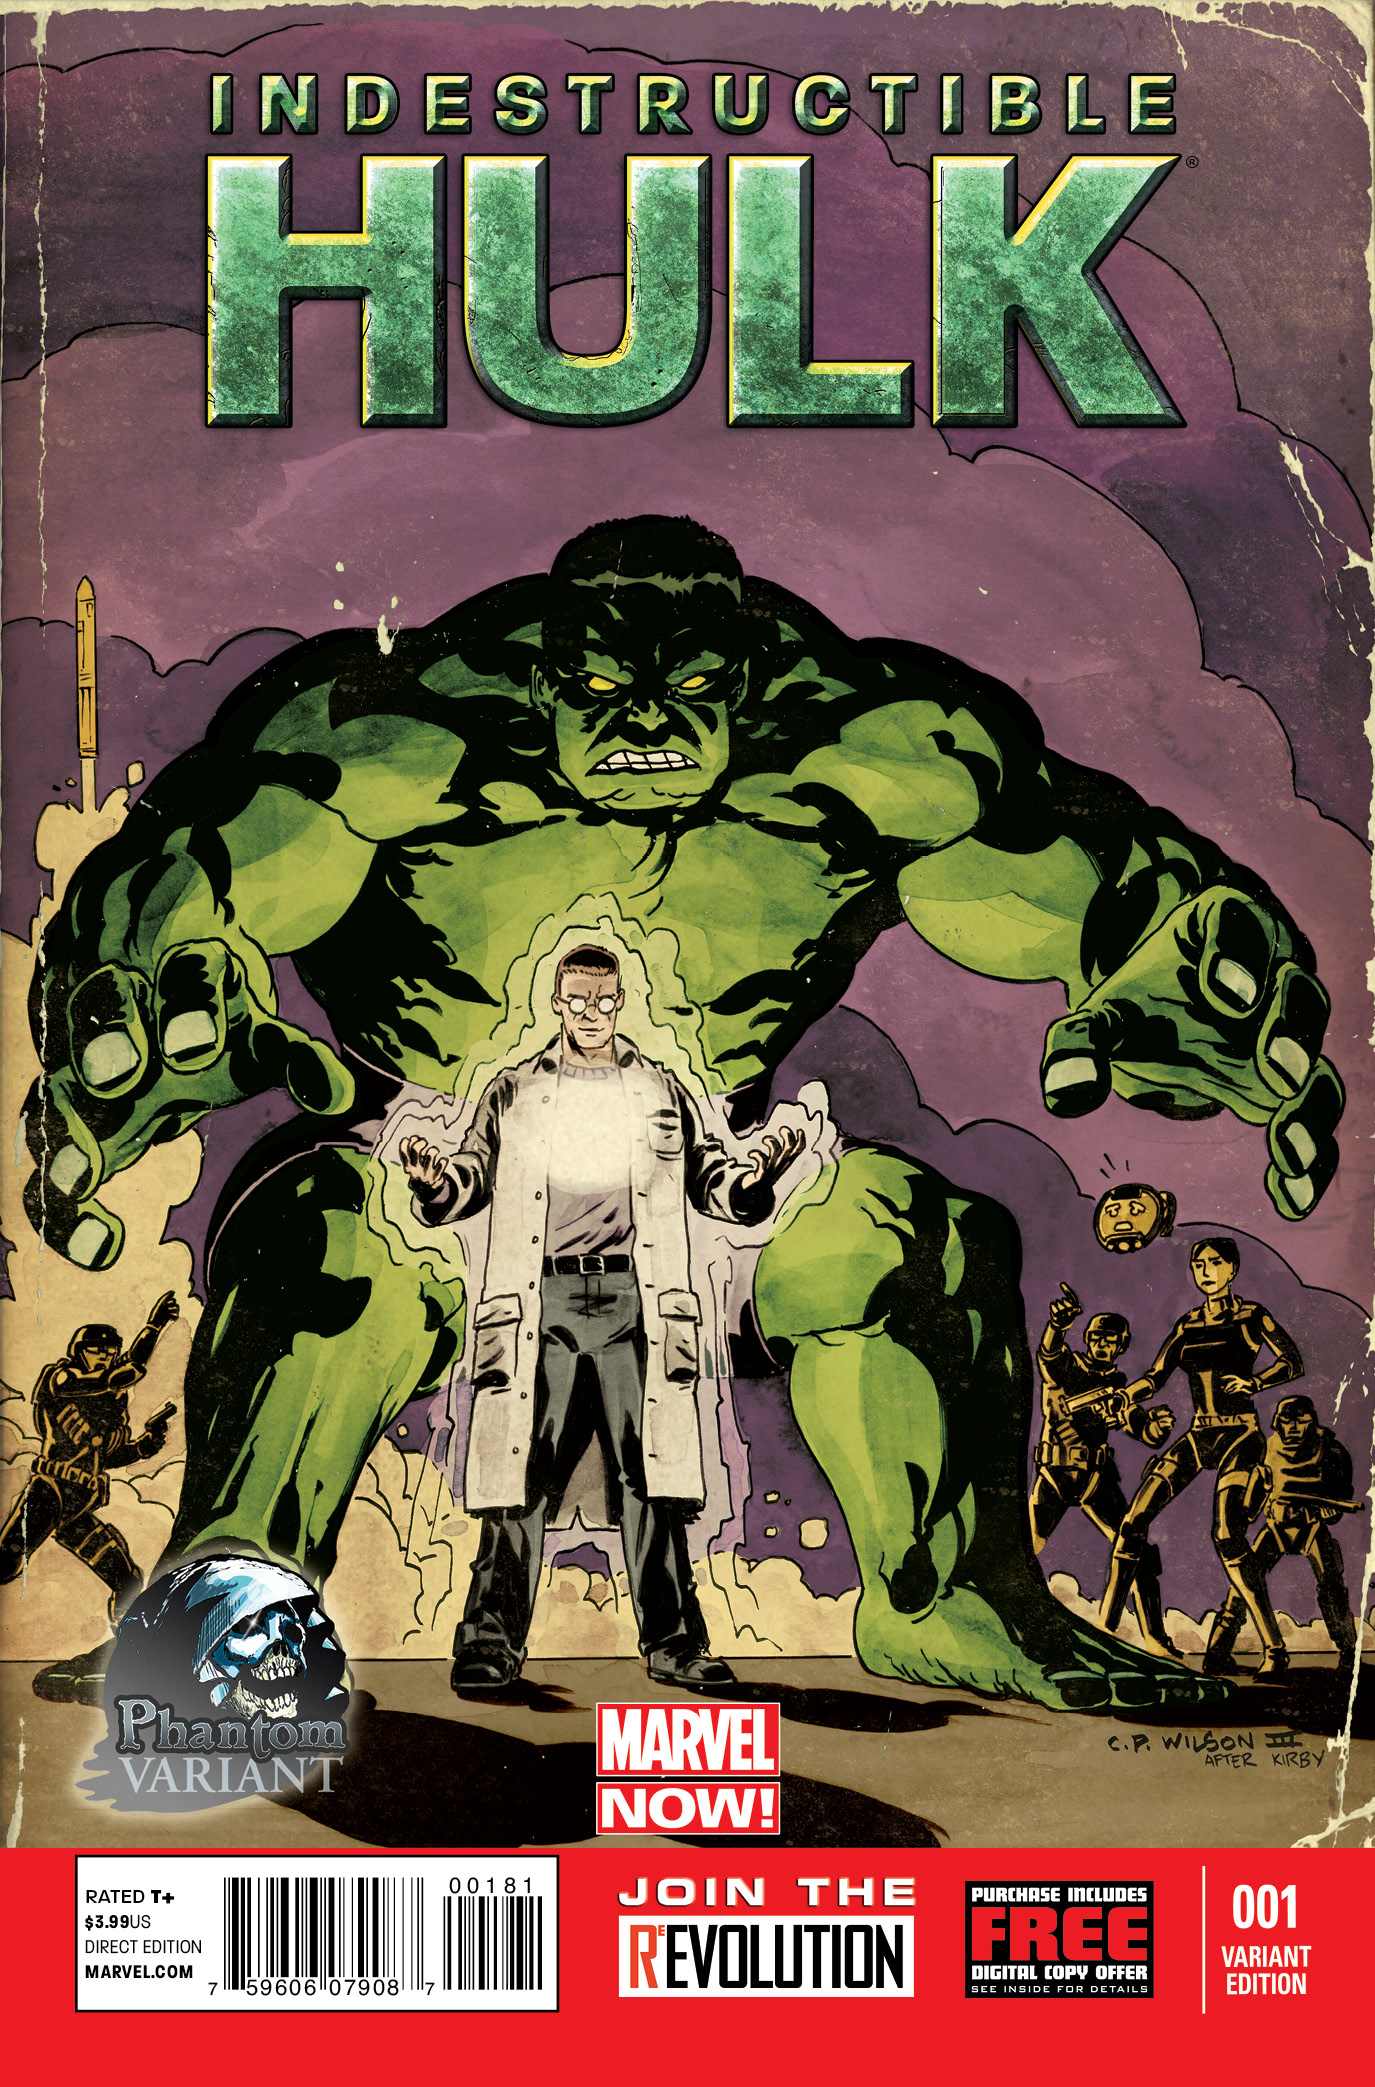 Amazing Indestructible Hulk Pictures & Backgrounds